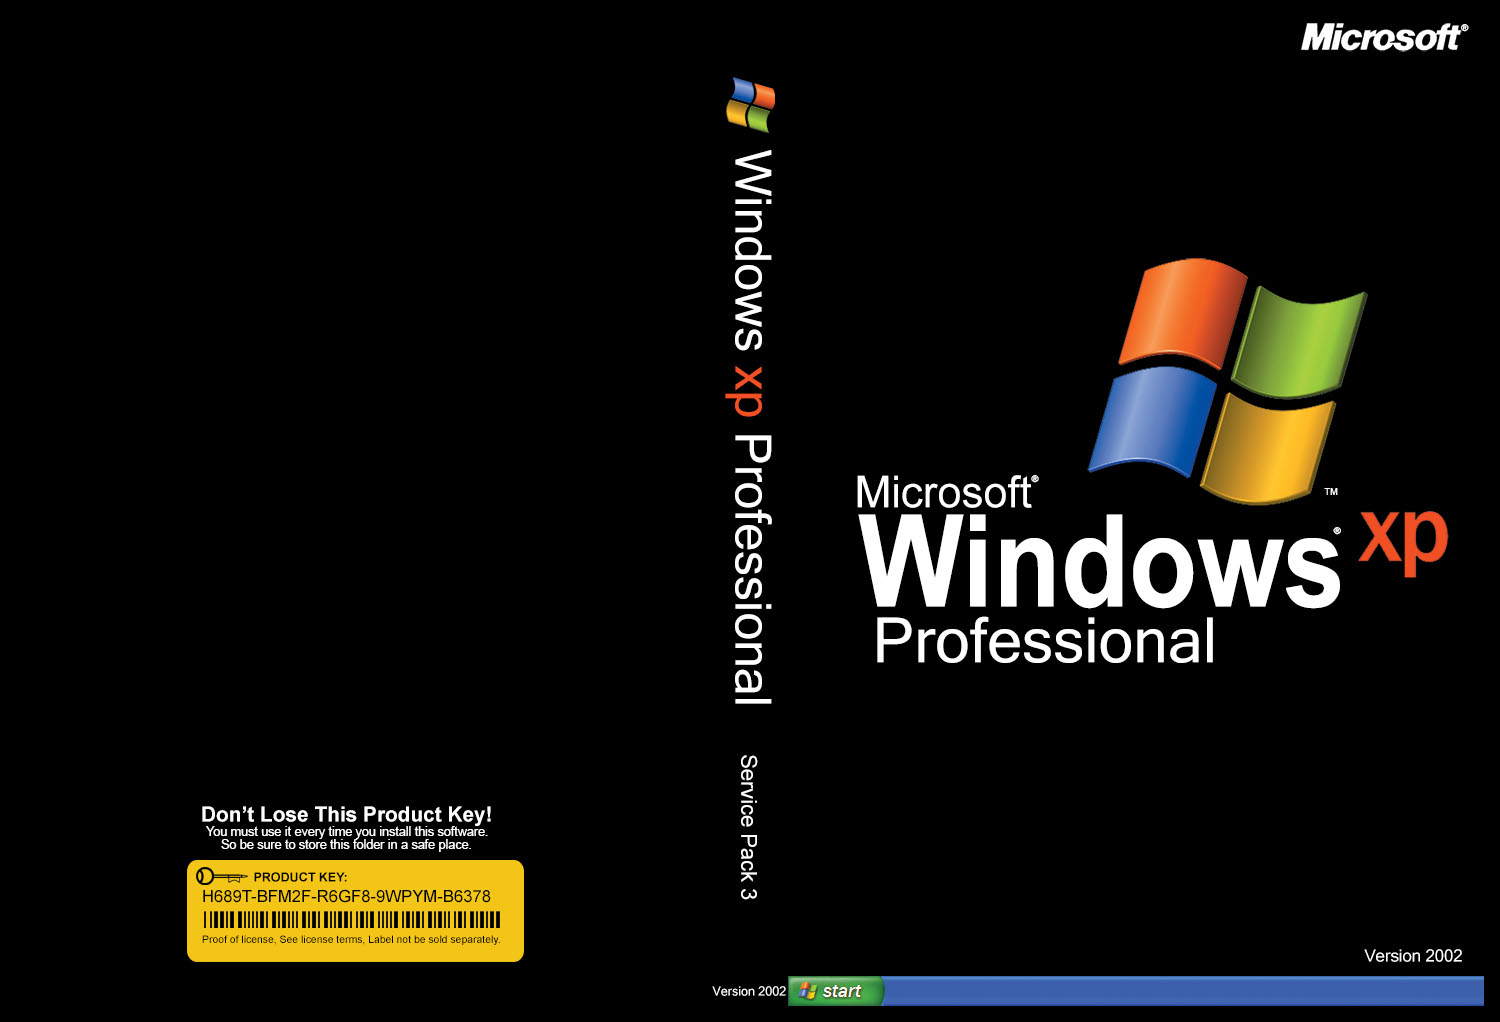 Microsoft Windows XP Professional SP3 - DVD Cover by ApostolosMistilioglu  on DeviantArt